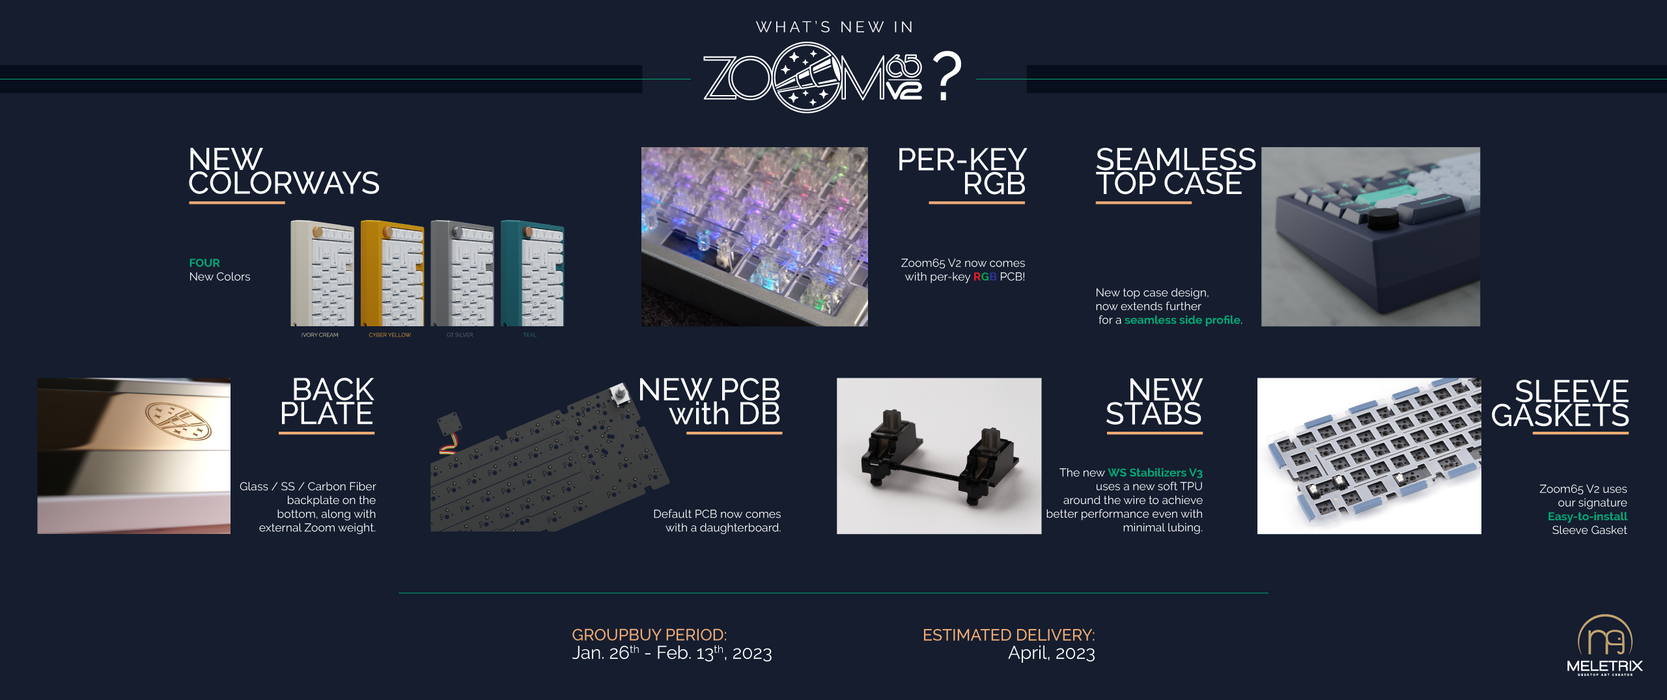 Zoom65 Essential Edition V2 - Wild Green Mechanical Keyboard Kit